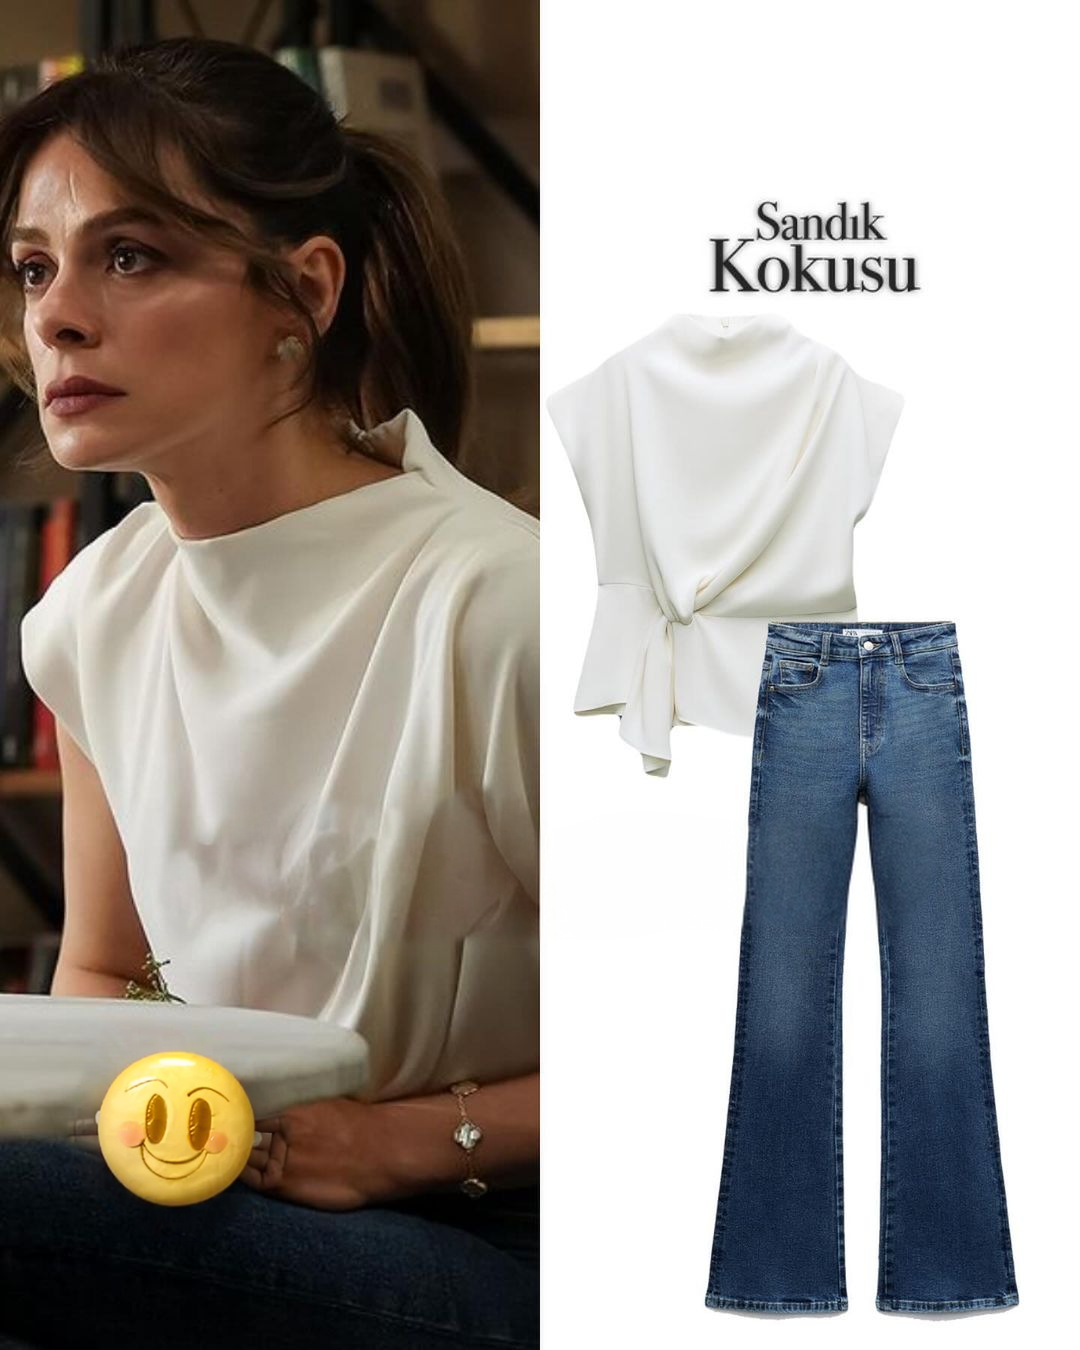 The White Blouse And Jeans Worn By Özge Özpirinçci